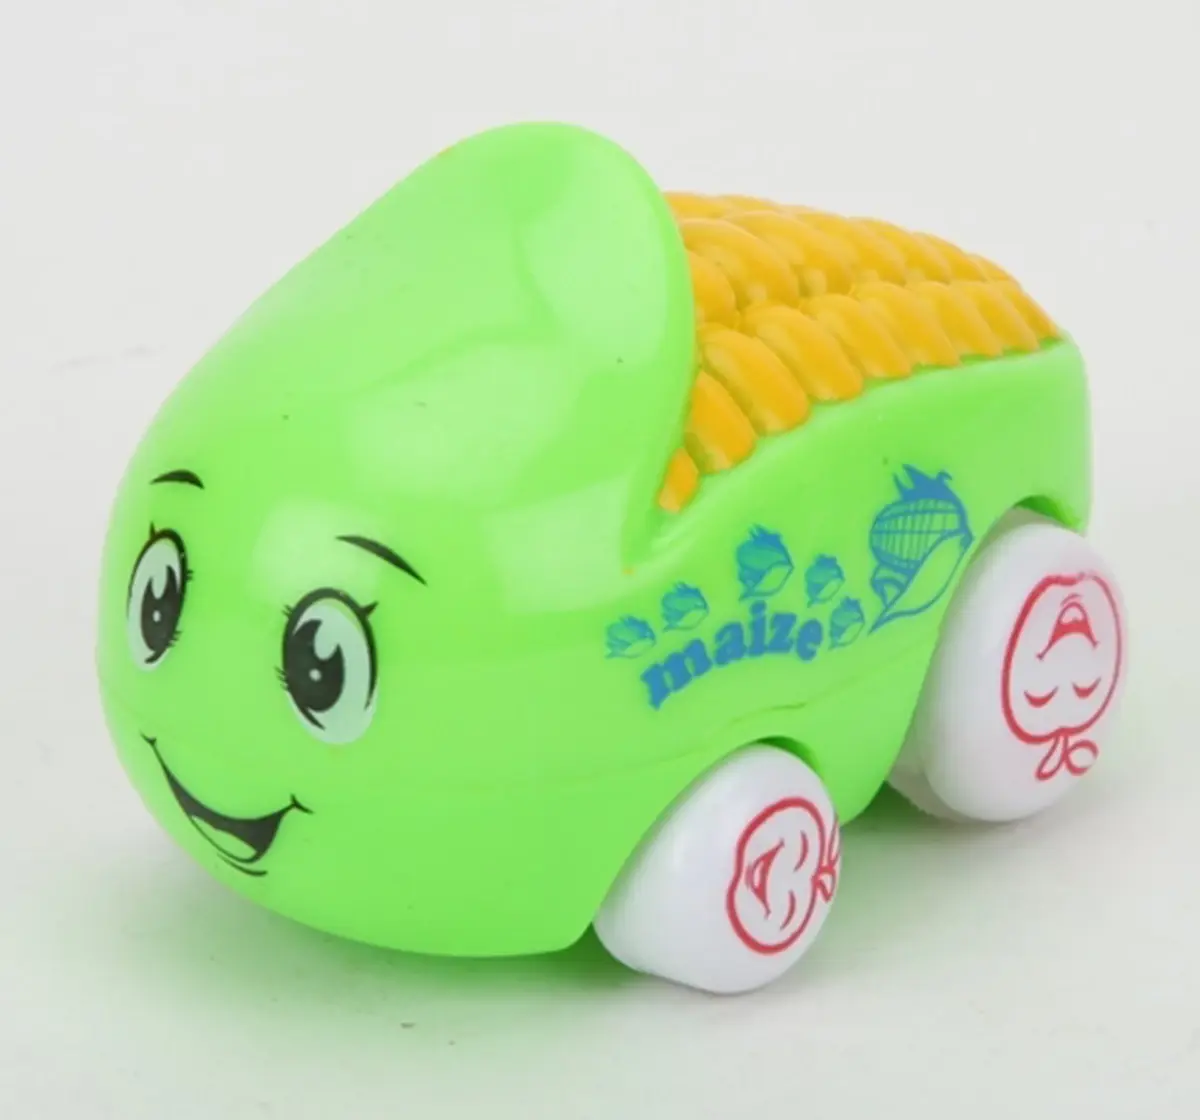 Toyspree Vegetable On Wheels ( Set Of 4Pc ),  18M+ (Multicolour)